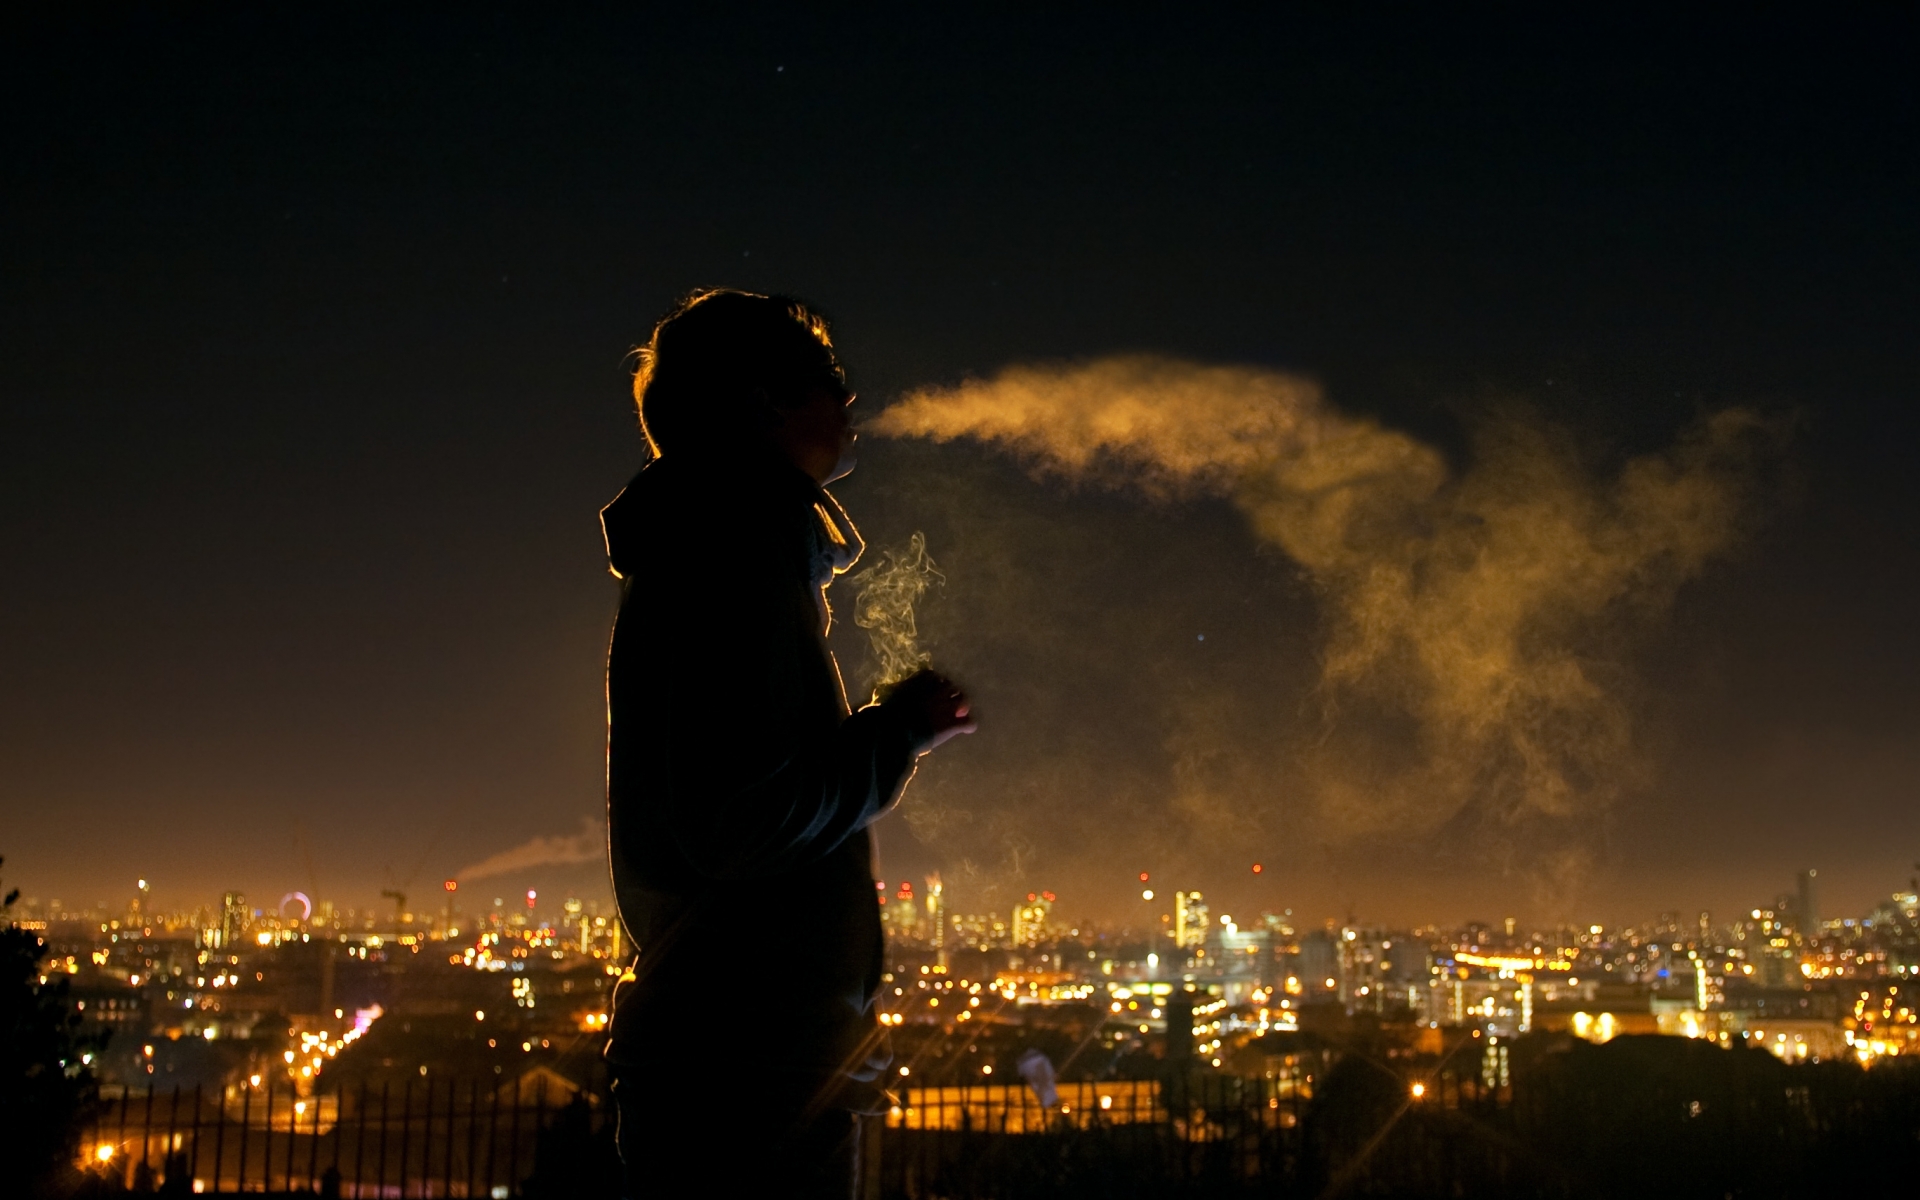 mood, Alone, Tranquil, Solitude, People, Men, Males, Boy, Cities, Scenic, Lights, Night, Cigarette, Smoke Wallpaper